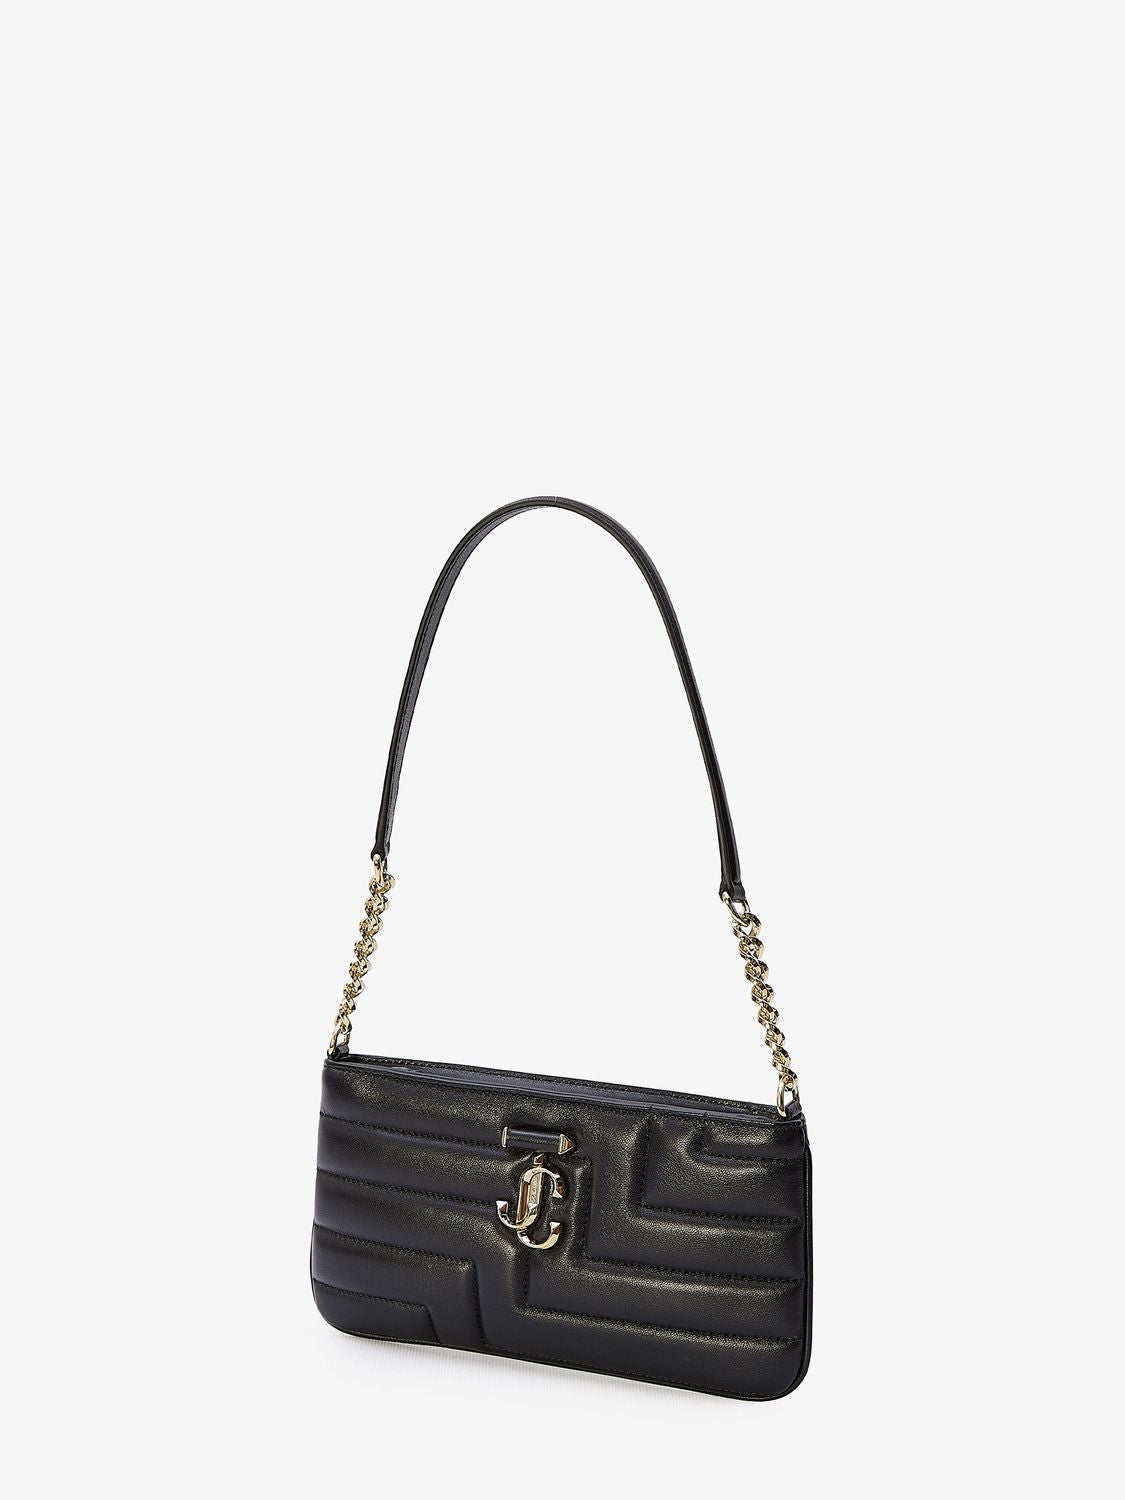 Shop Jimmy Choo Chic And Elegant Quilted Shoulder Bag For Women In Black